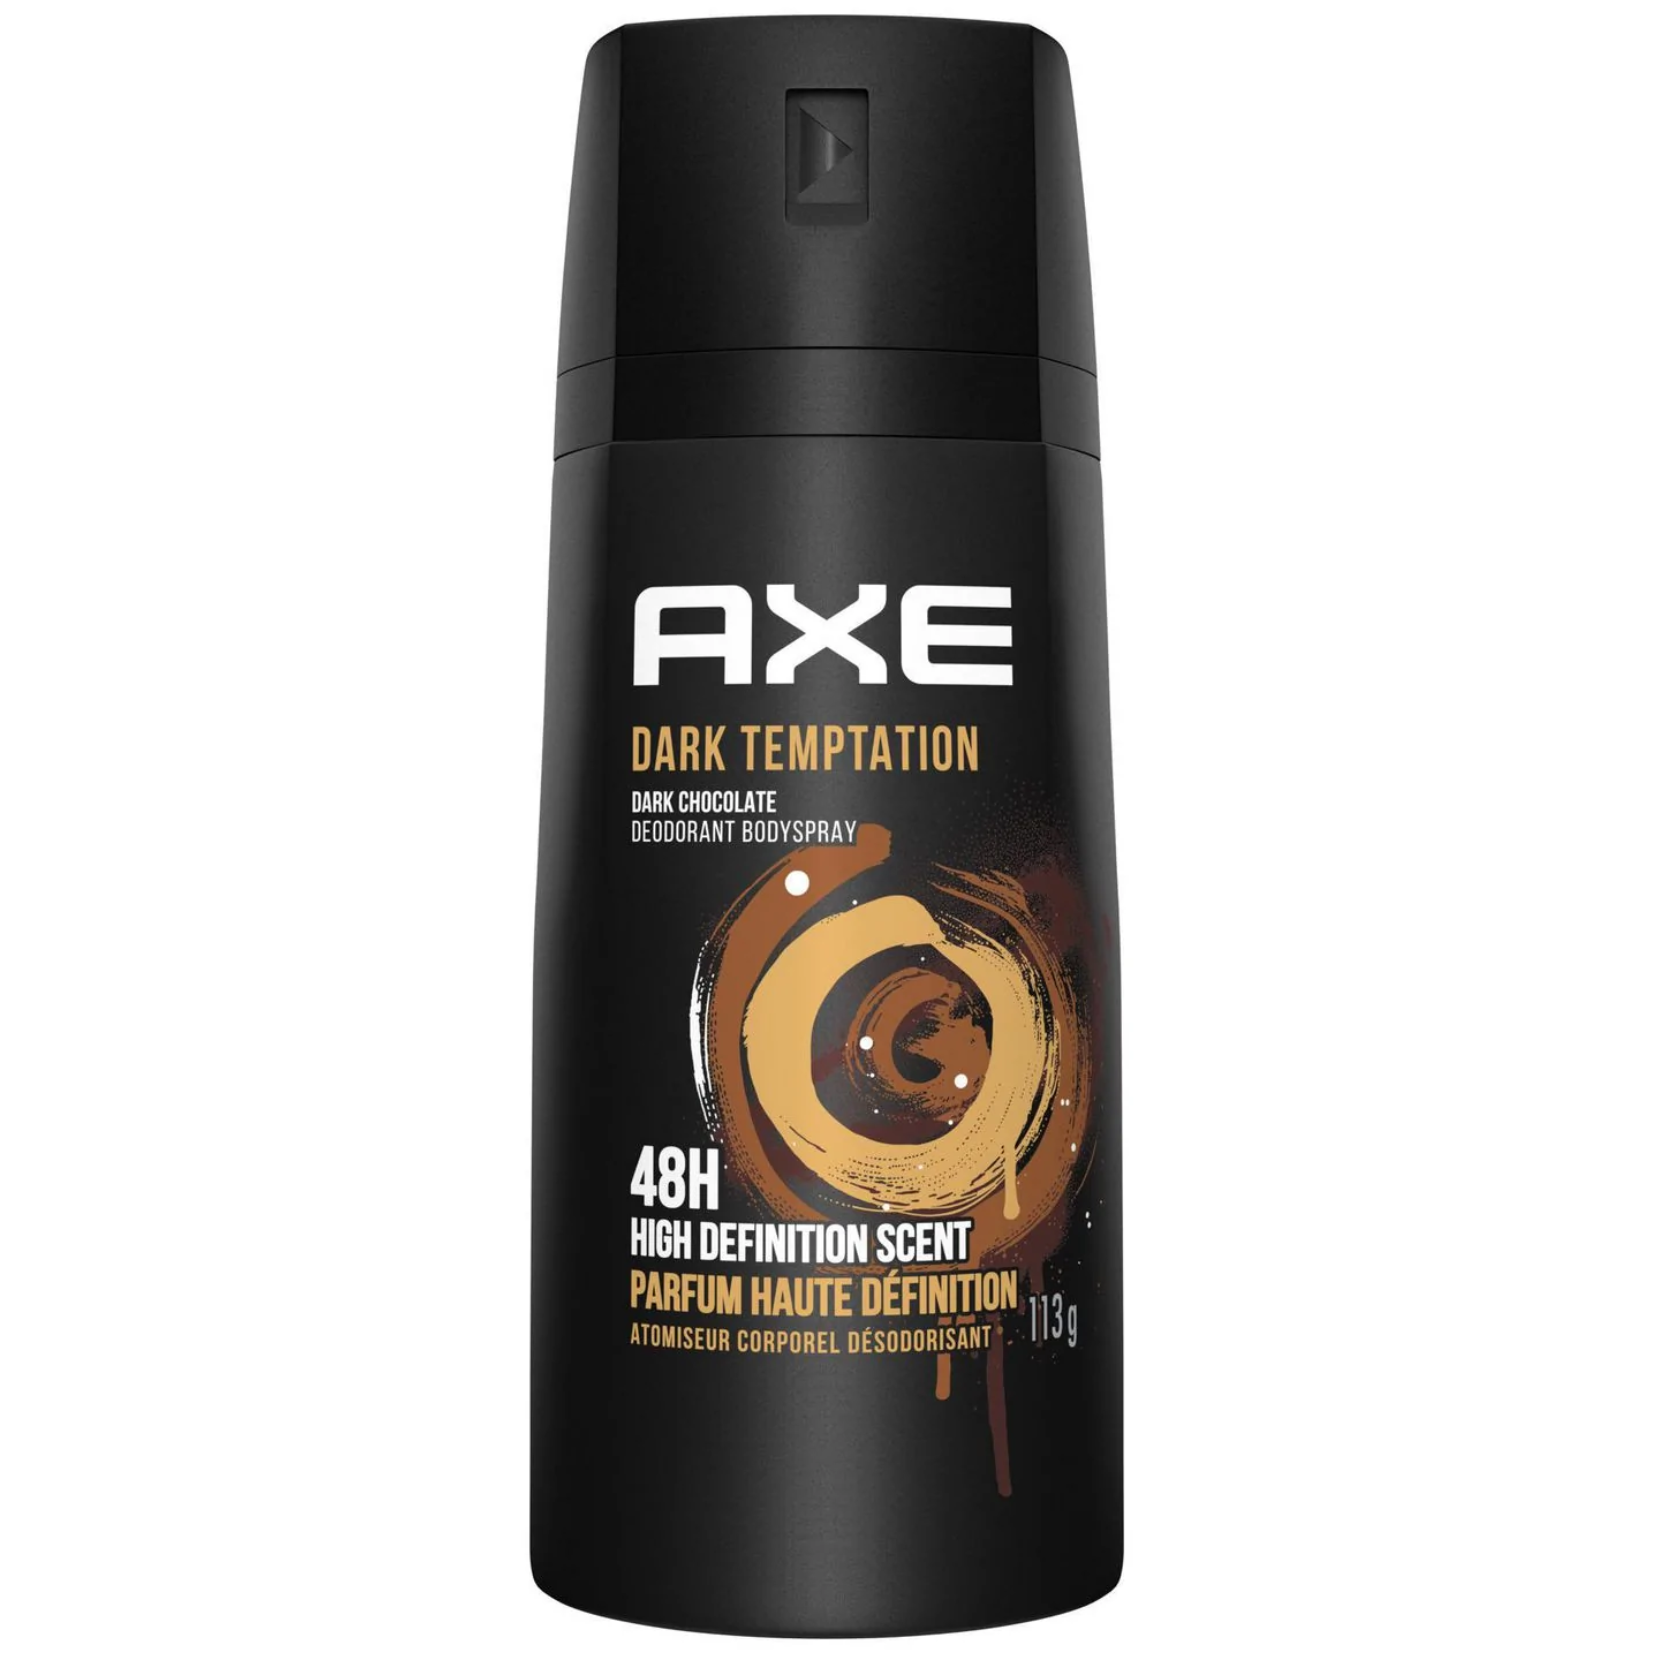 Axe Dark Temptation Deodorant Body Spray 113g